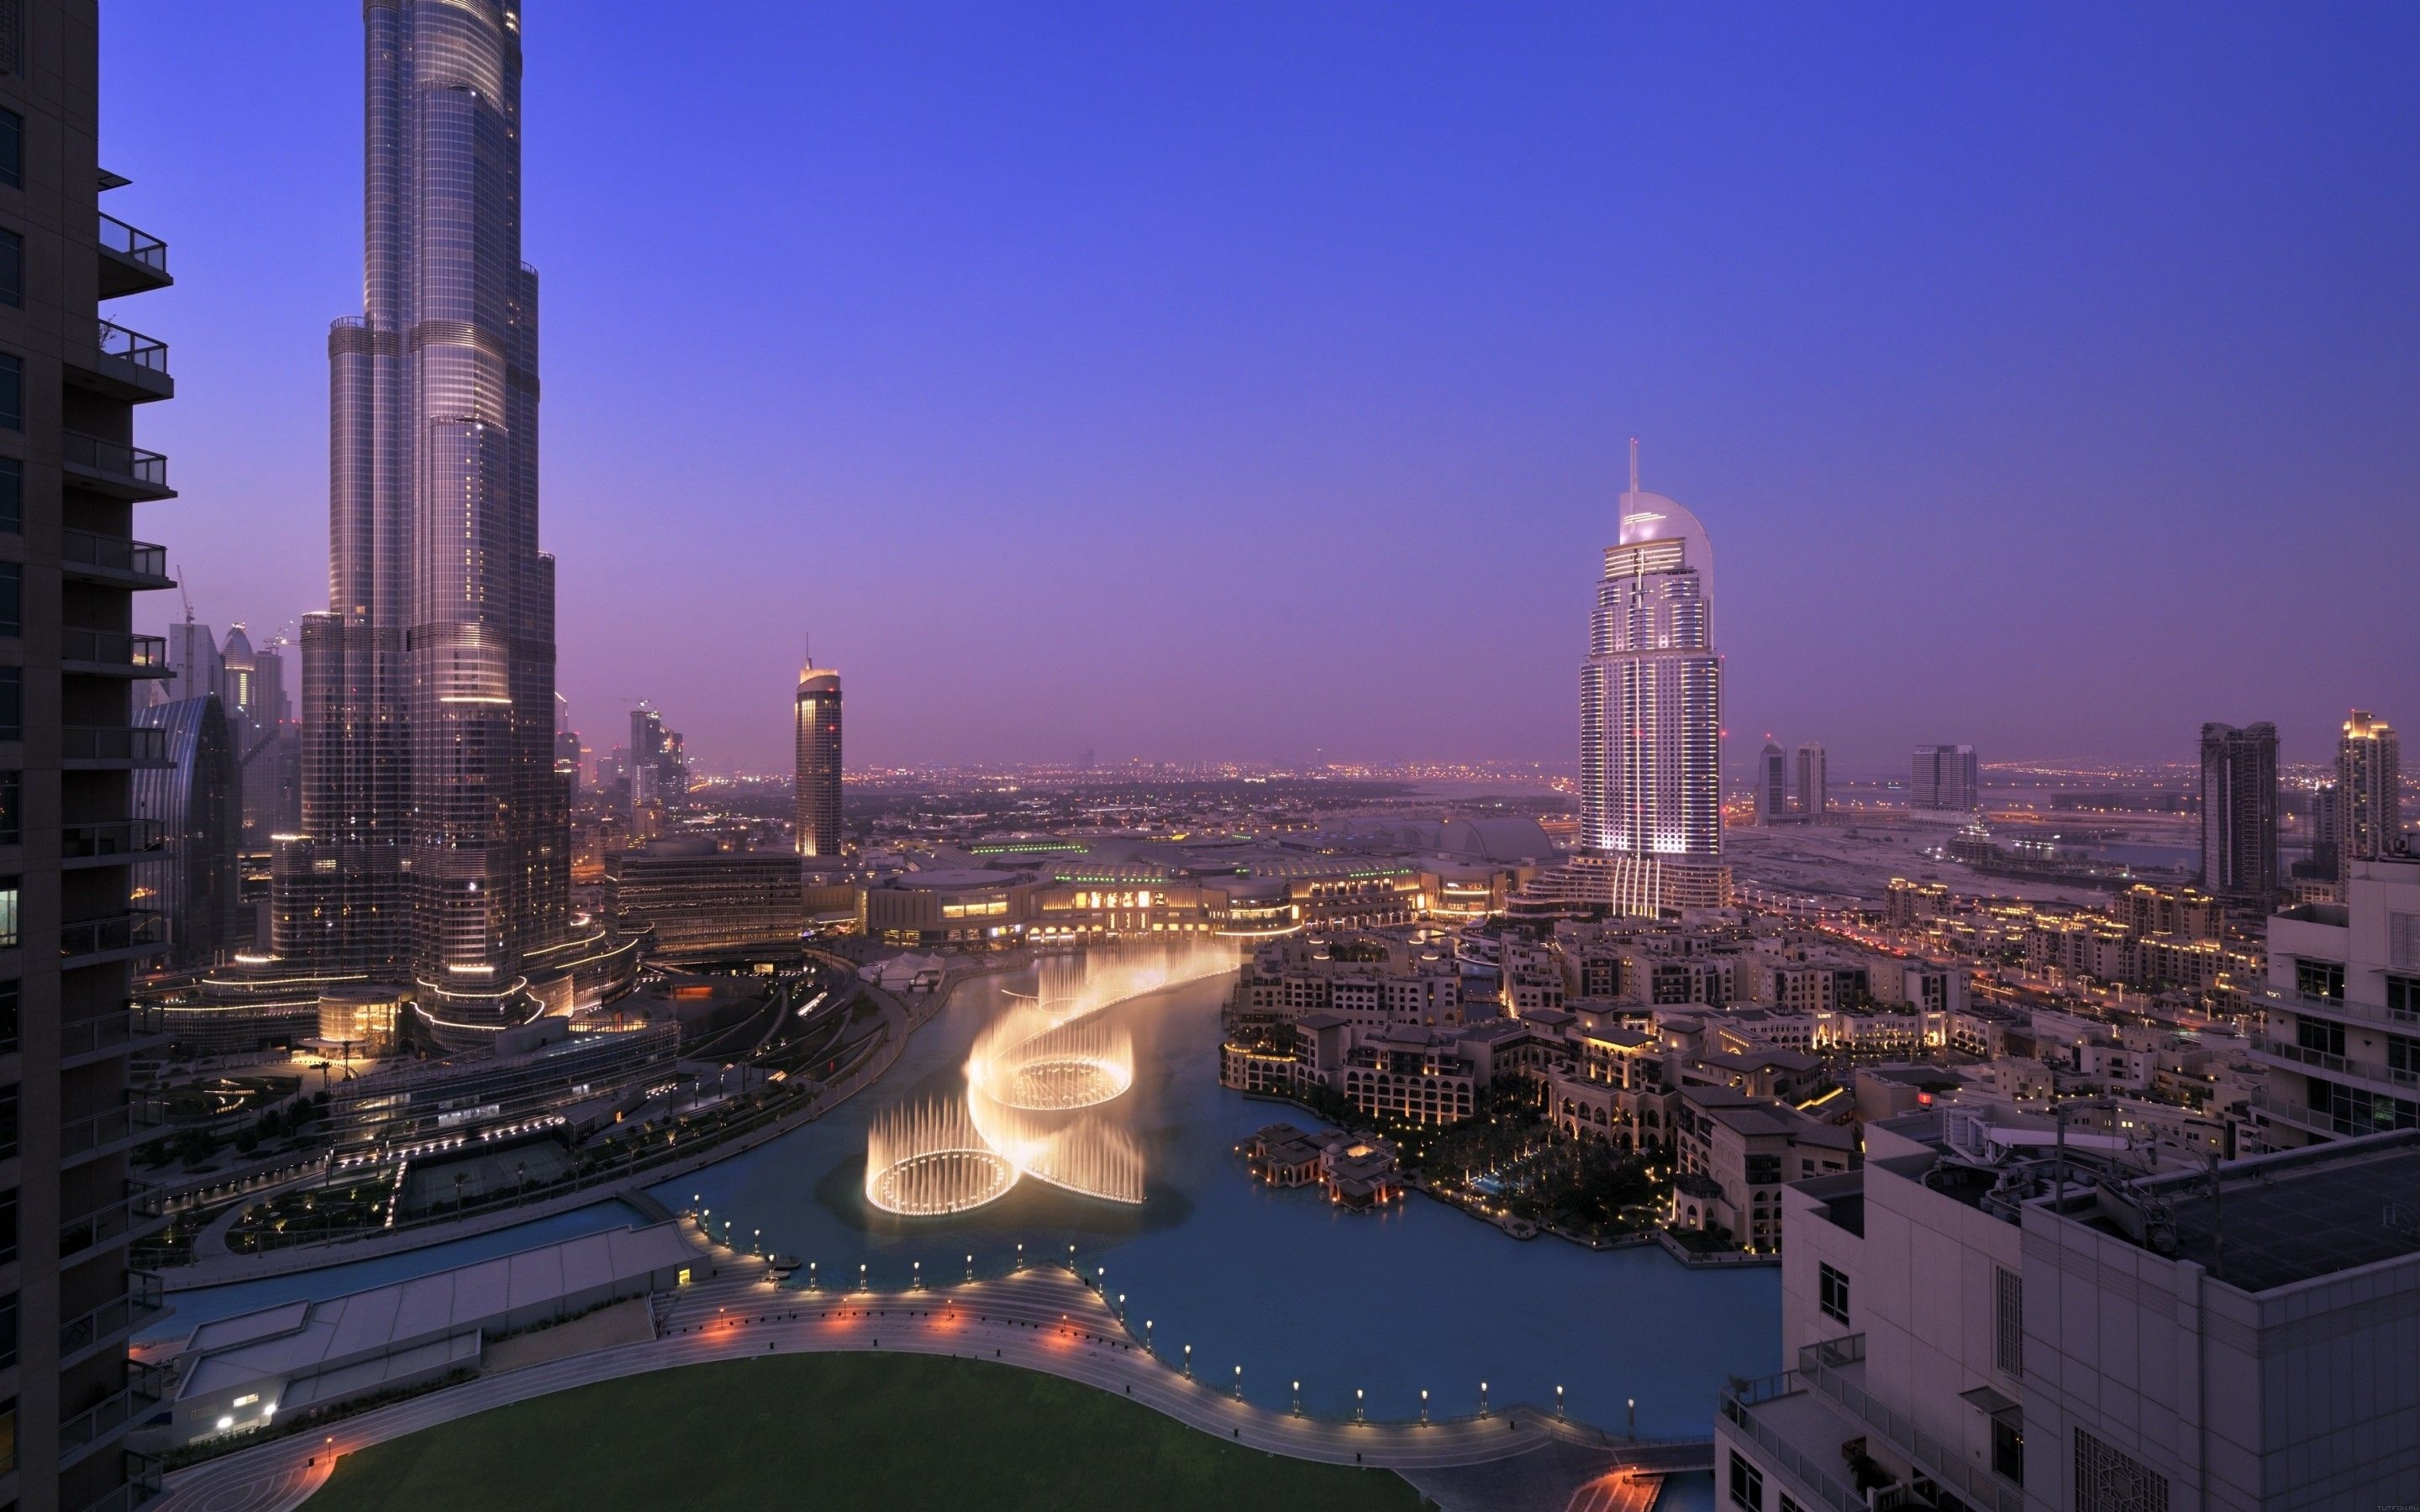 ОАЭ, Дубаи, вечер, небоскребы, светящиеся фонтаны, набережная, город, река, обои, United Arab Emirates, Dubai, evening, skyscrapers, glowing fountains, embankment, city, river, wallpaper